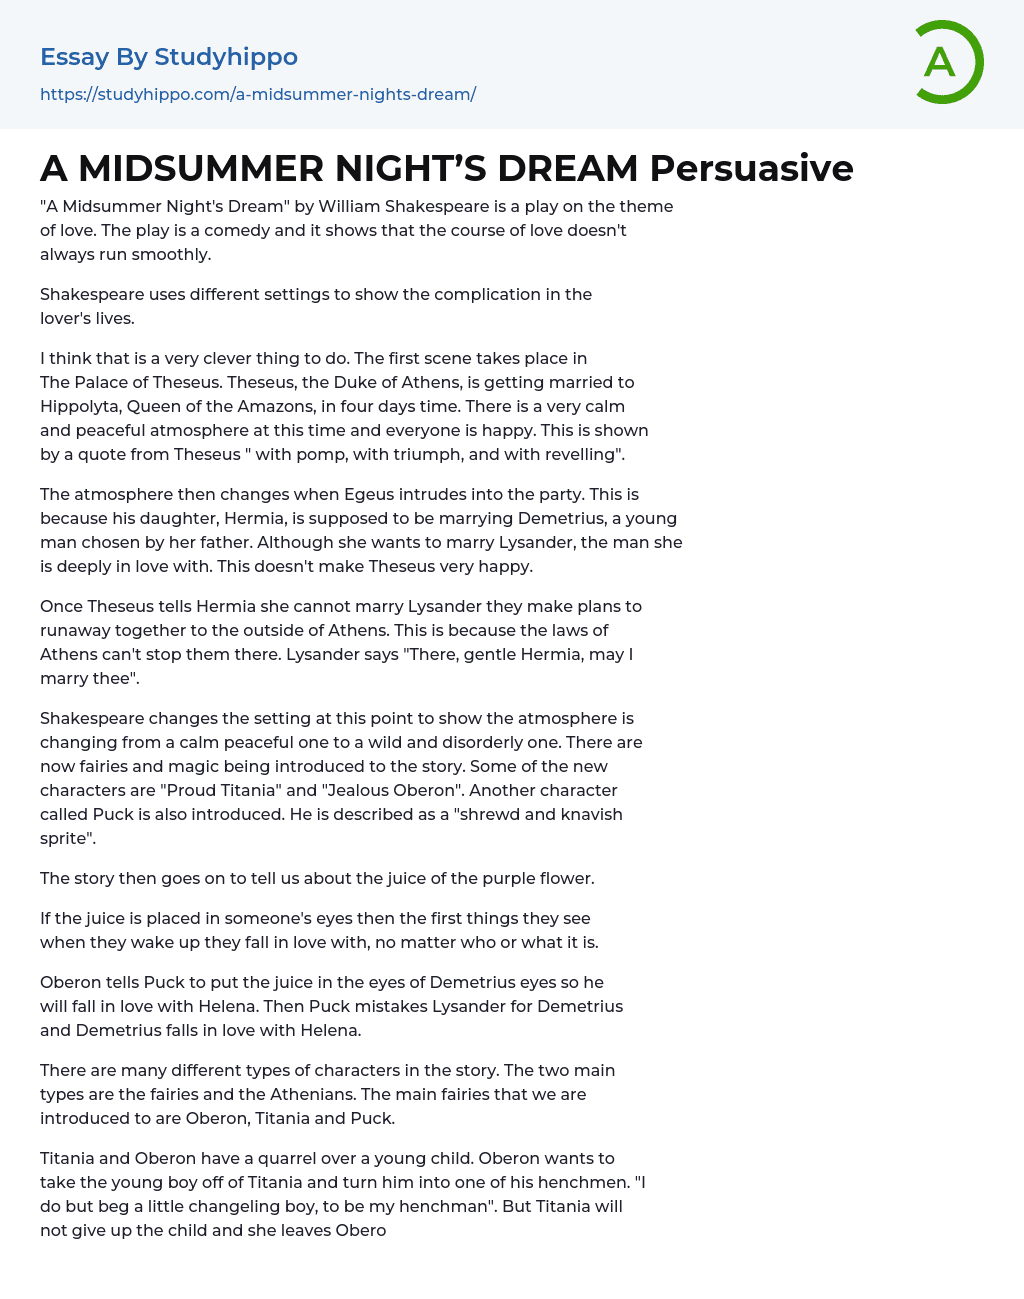 A MIDSUMMER NIGHT’S DREAM Persuasive